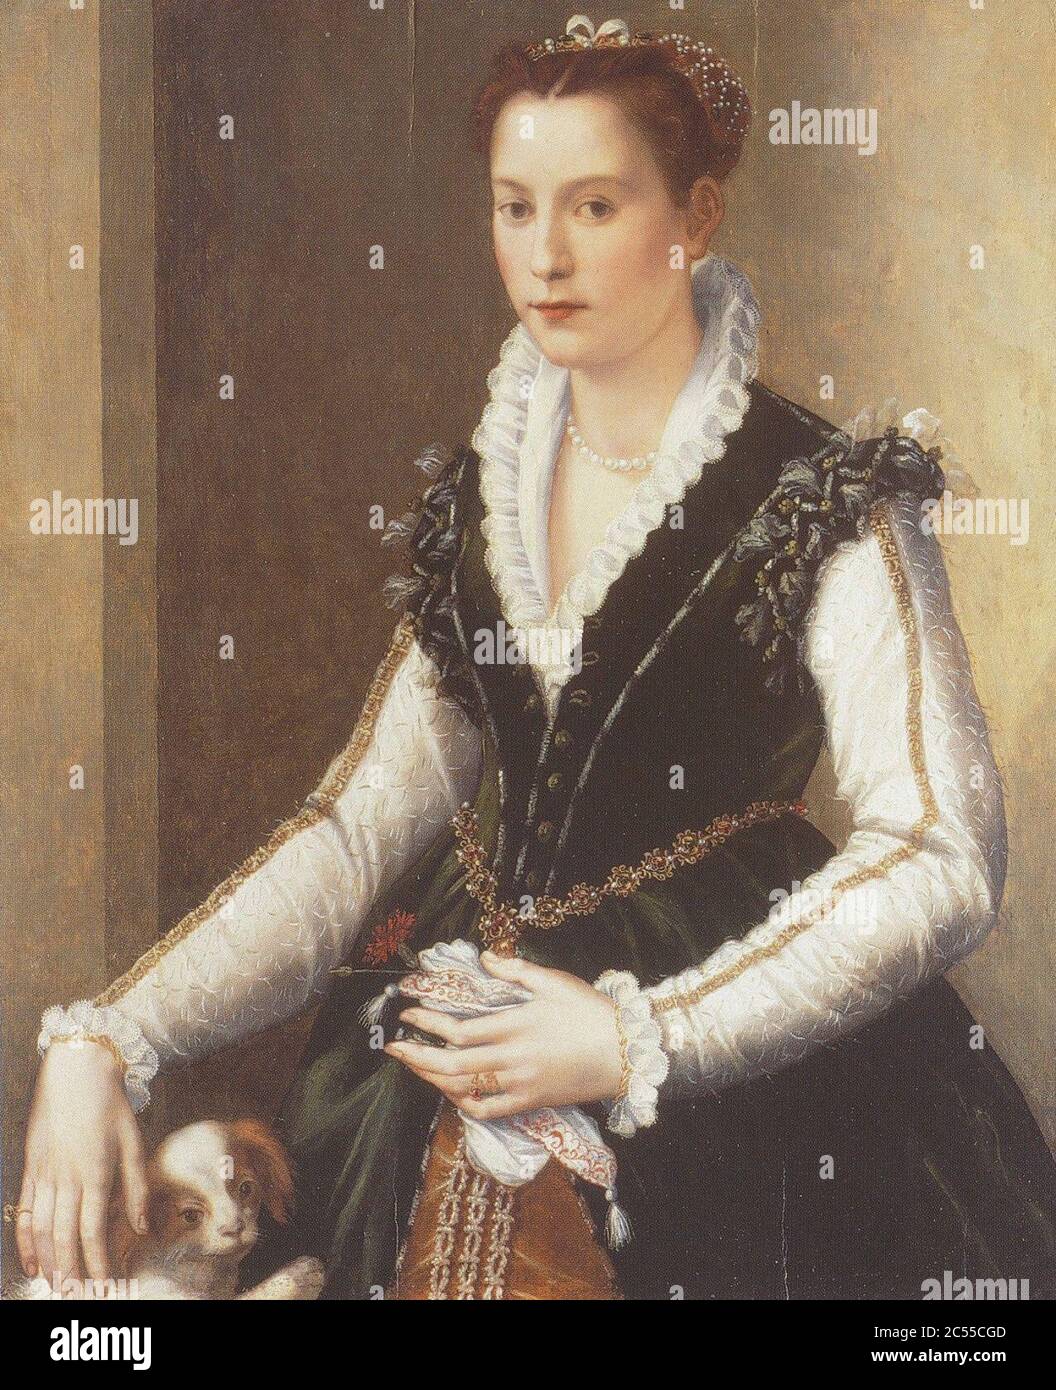 Isabella de' Medici, by Alessandro Allori. Stock Photo